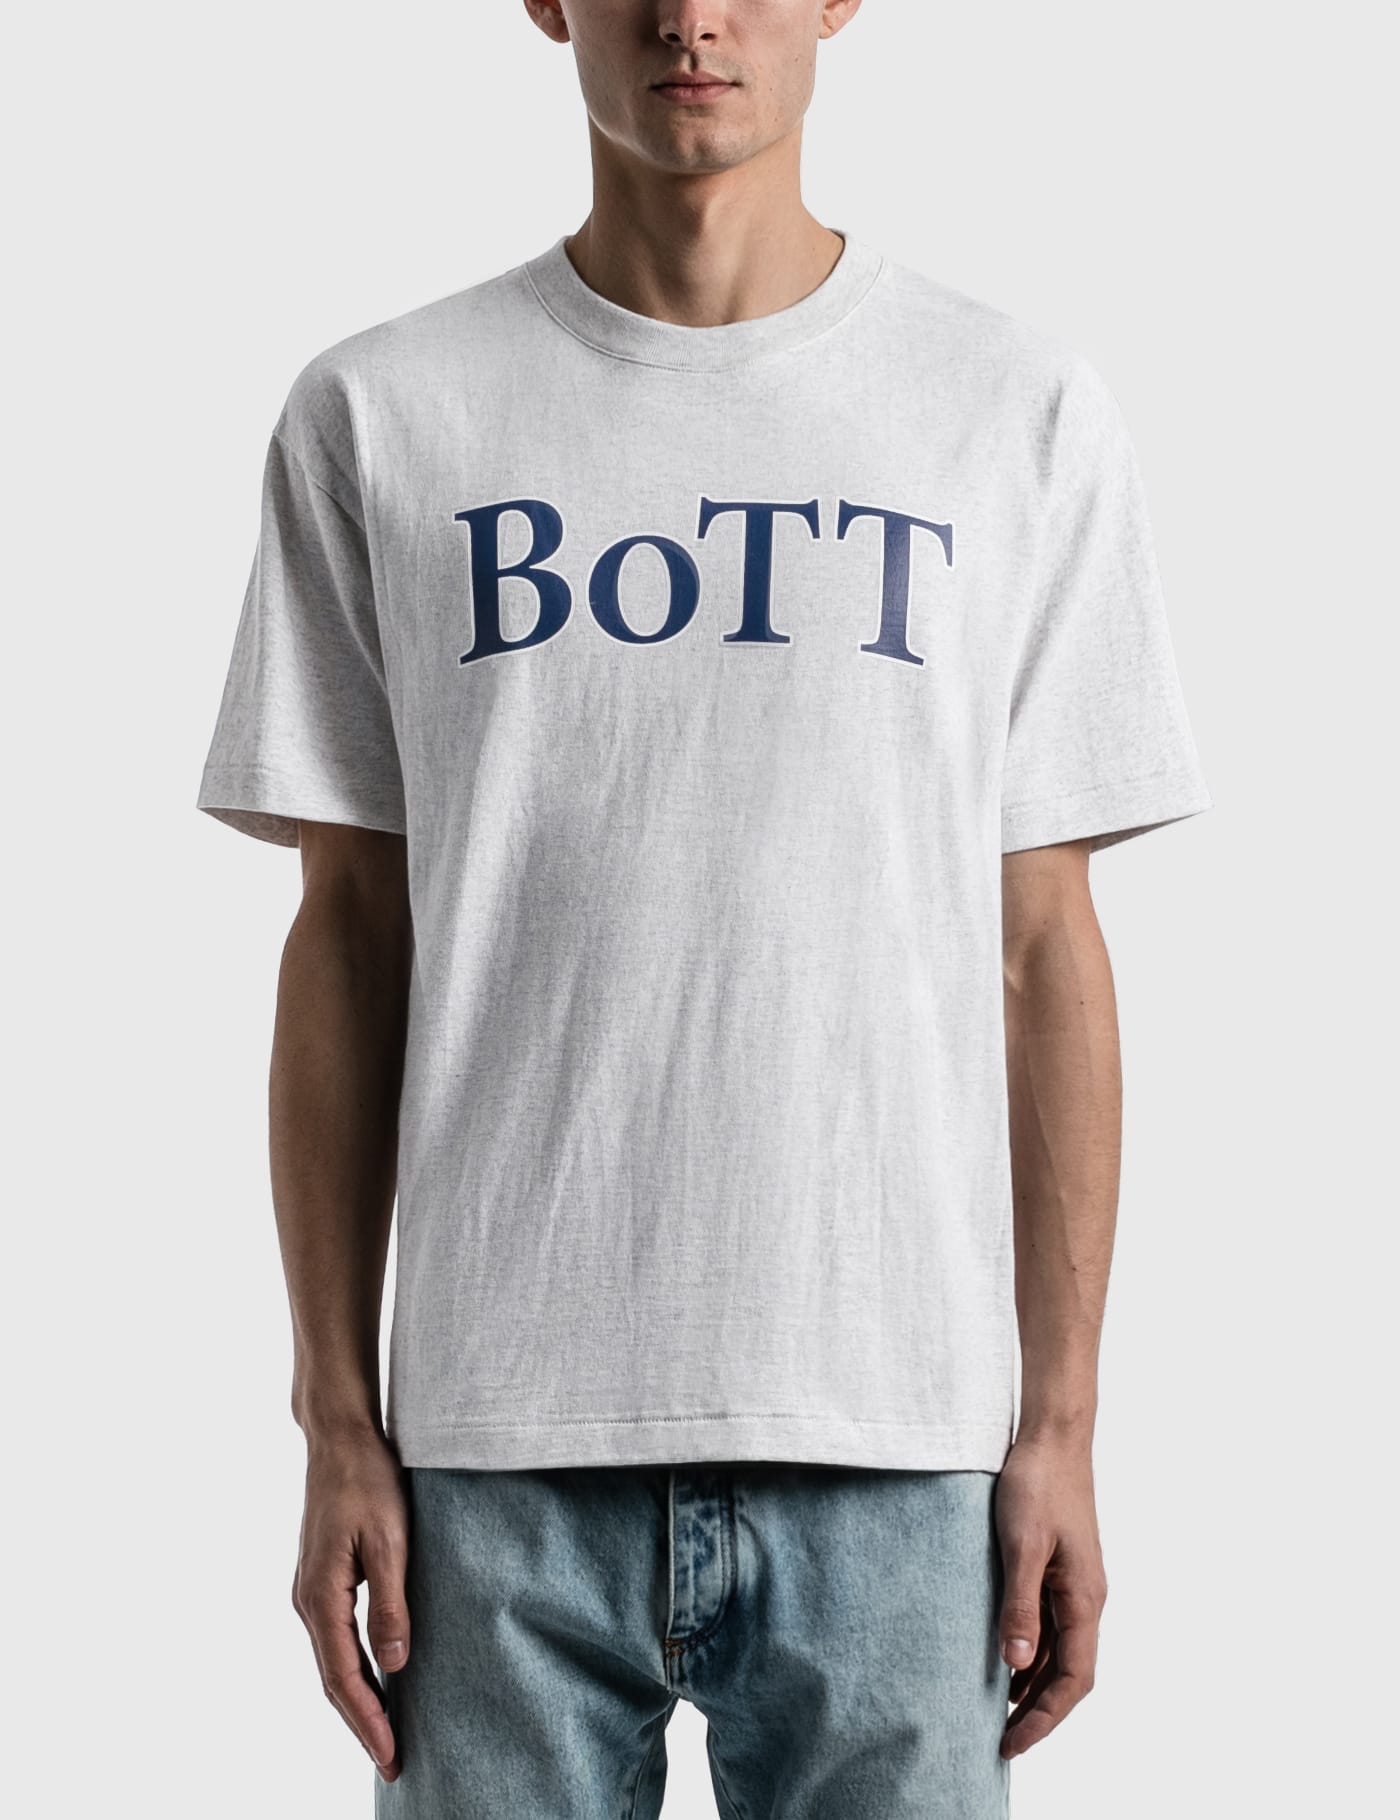 BoTT - BoTT OG Logo T-shirt | HBX - Globally Curated Fashion and 